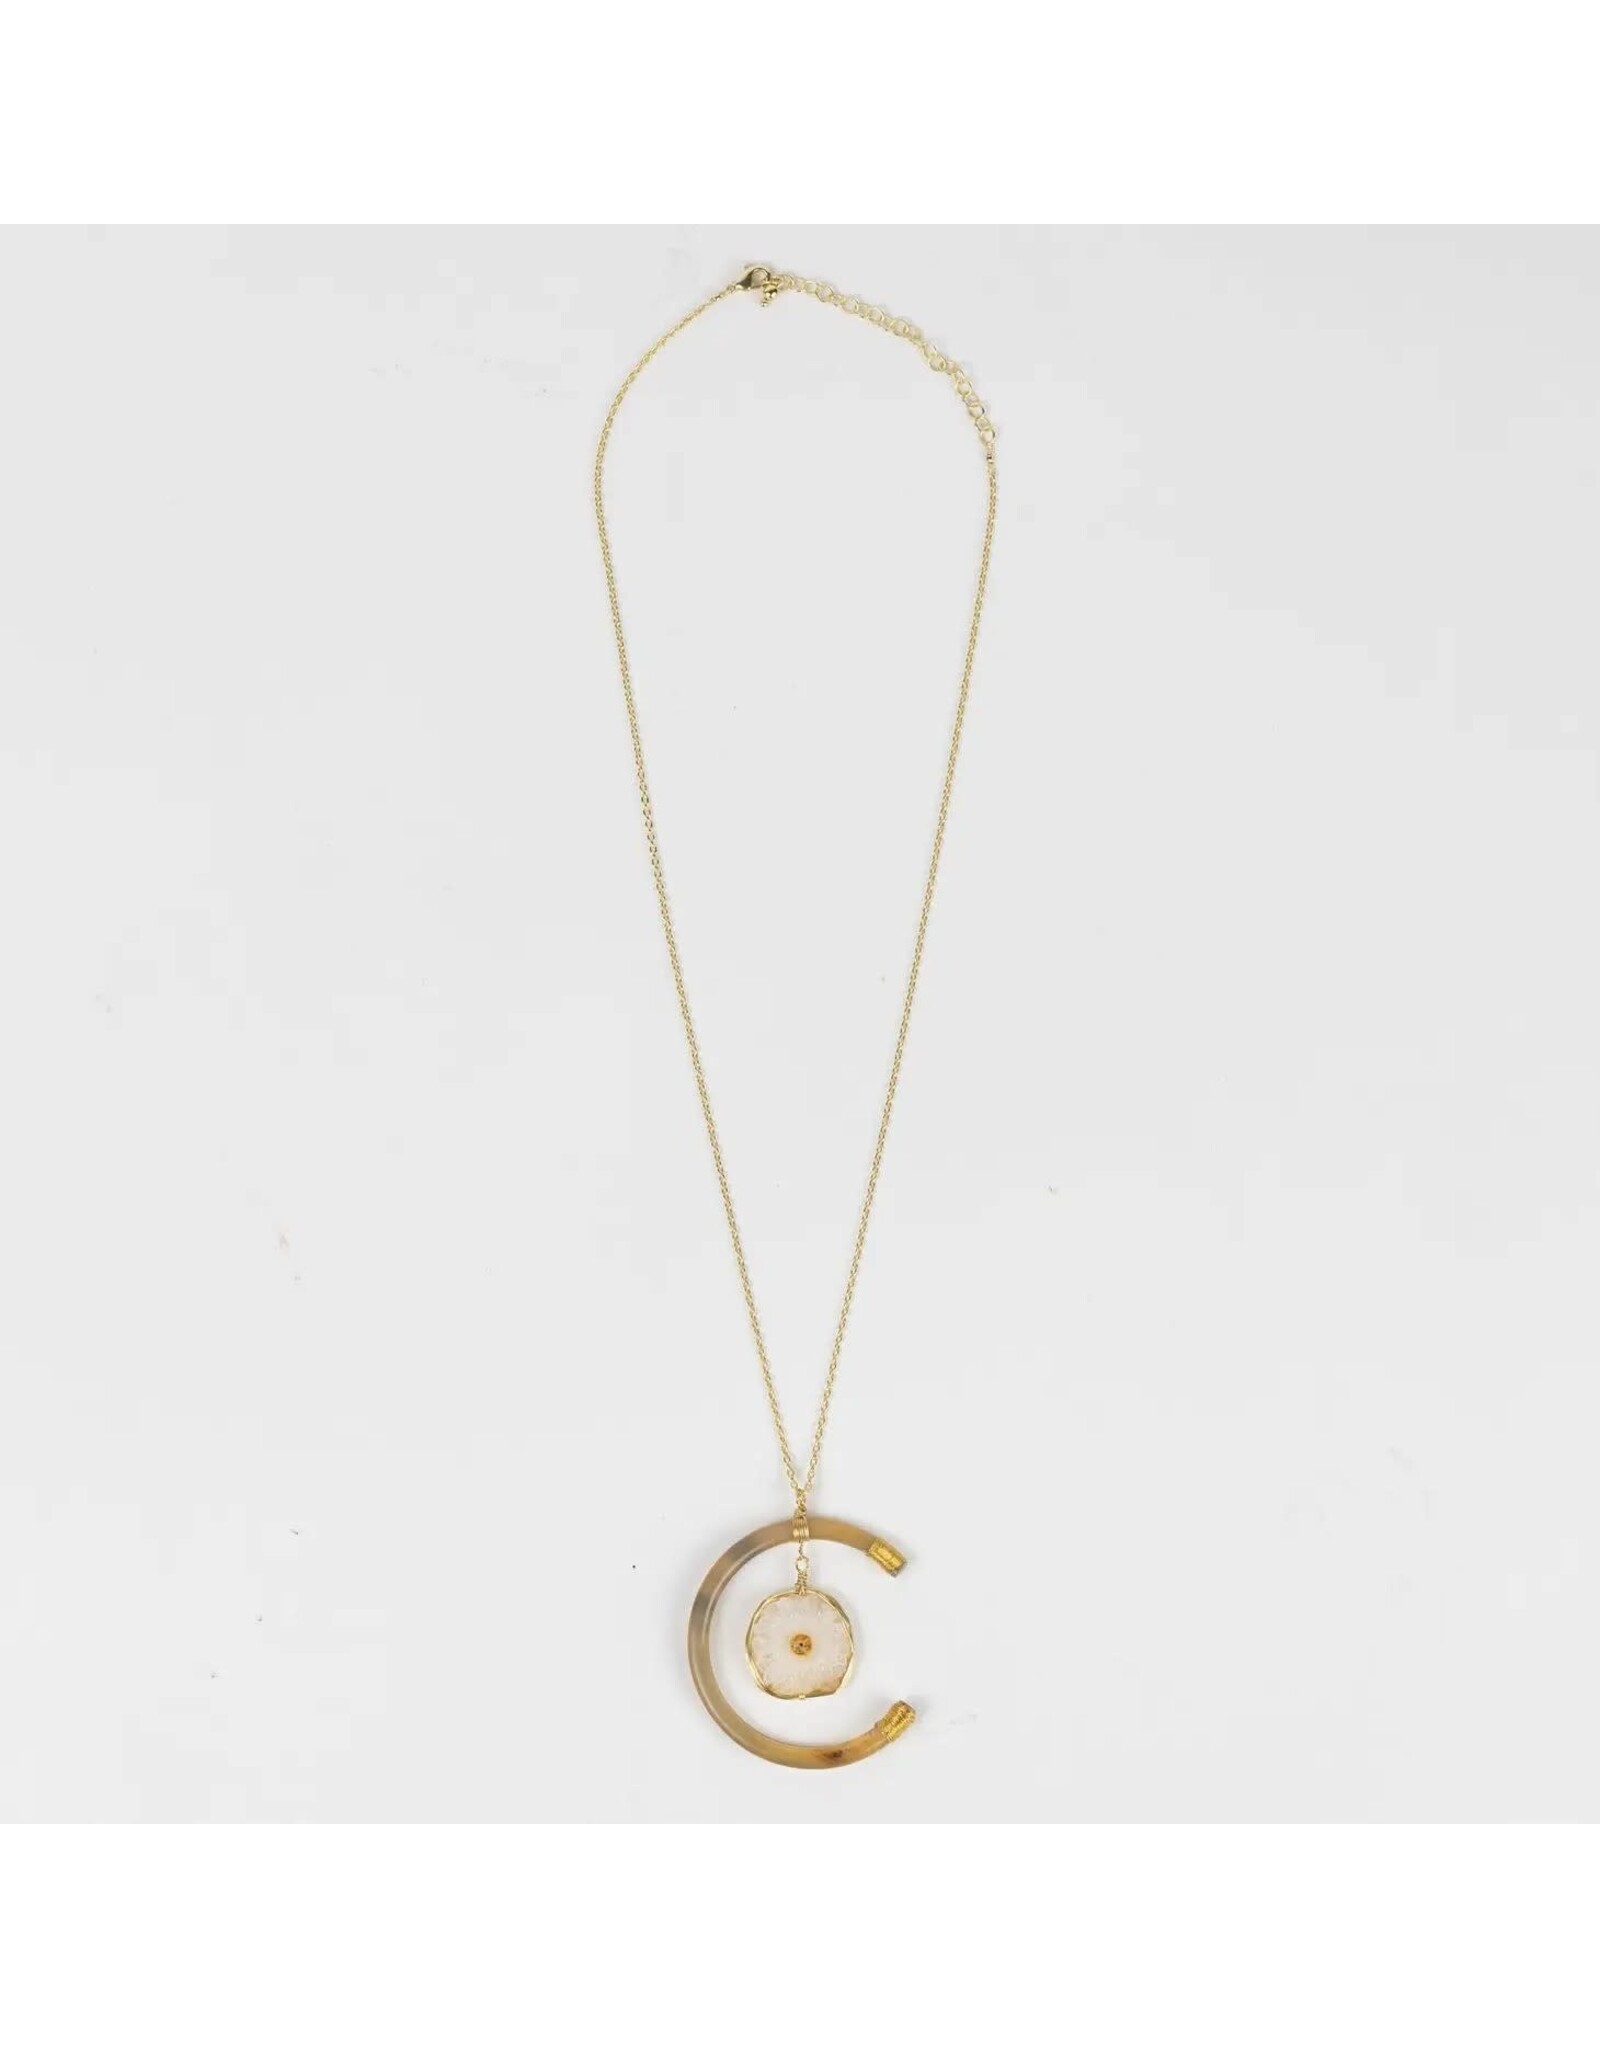 Celestial Reclaimed Horn & Geode Pendant Necklace, India